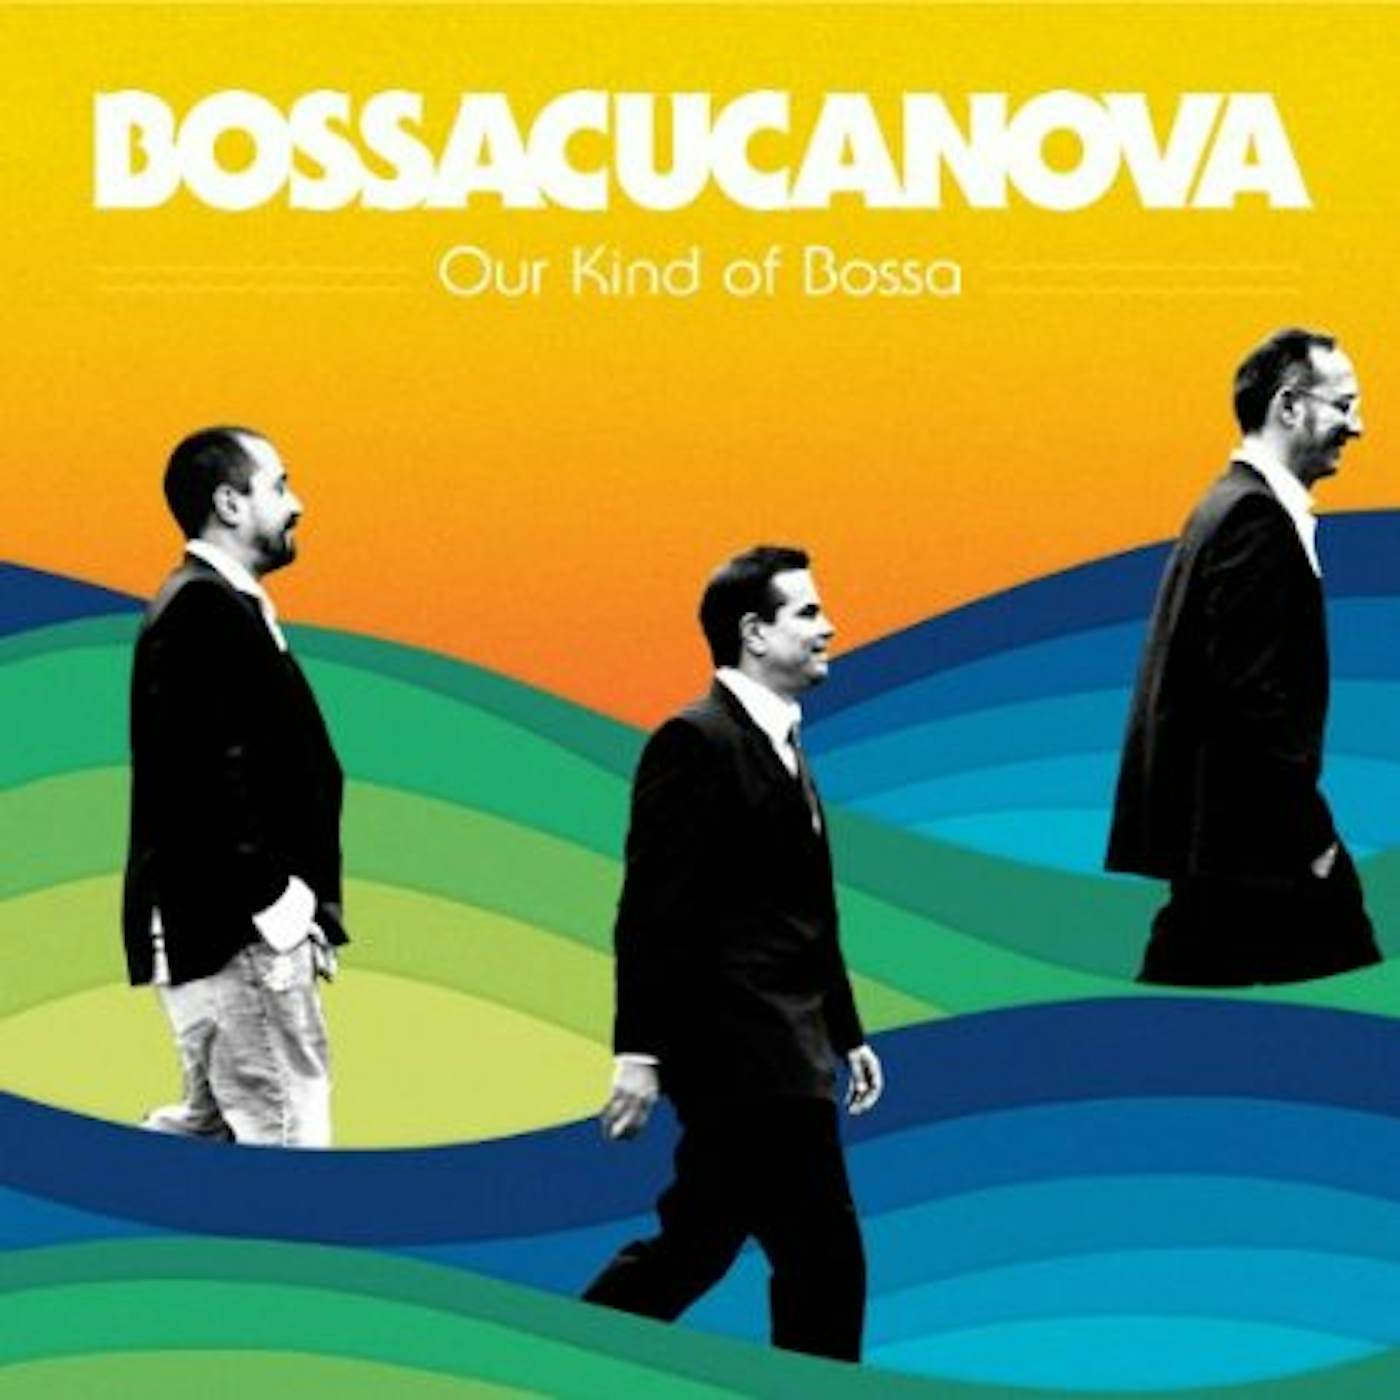 Bossacucanova OUR KIND OF BOSSA CD